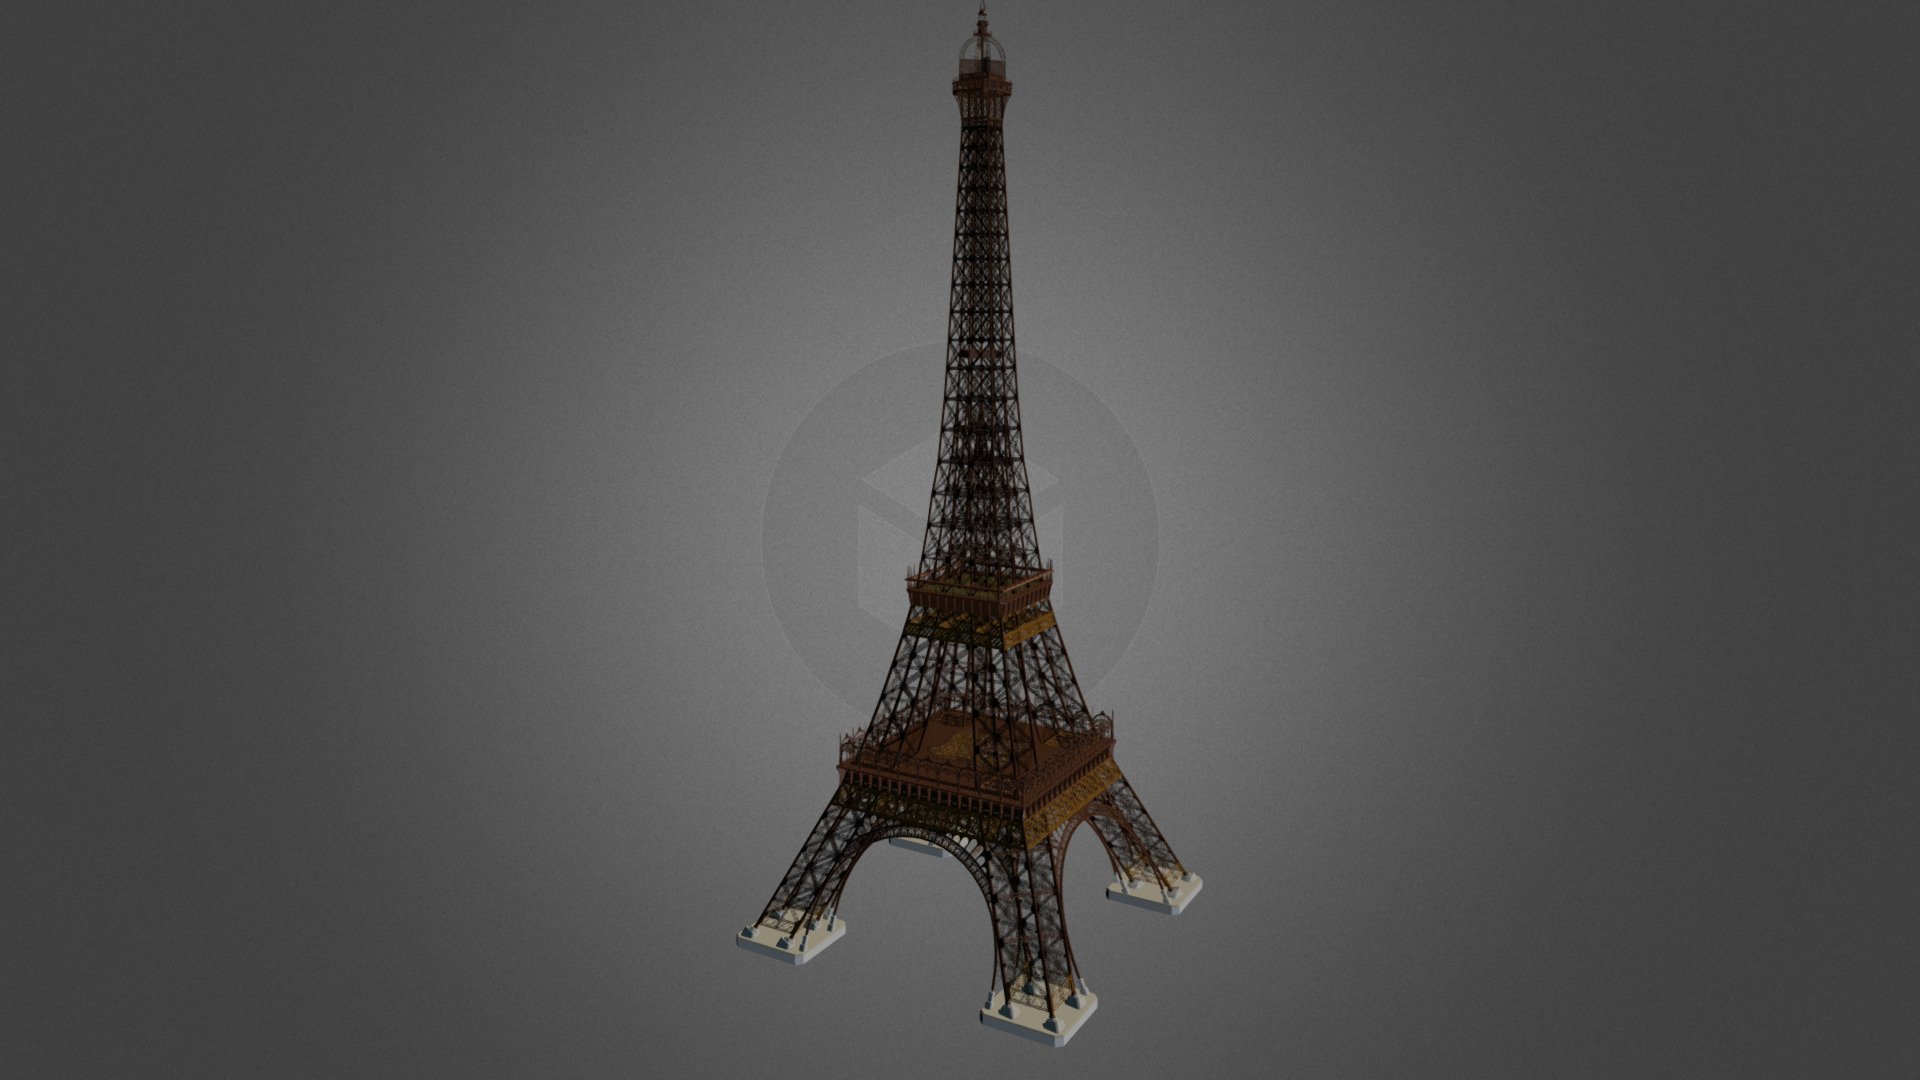 Eiffel tower with it's original design